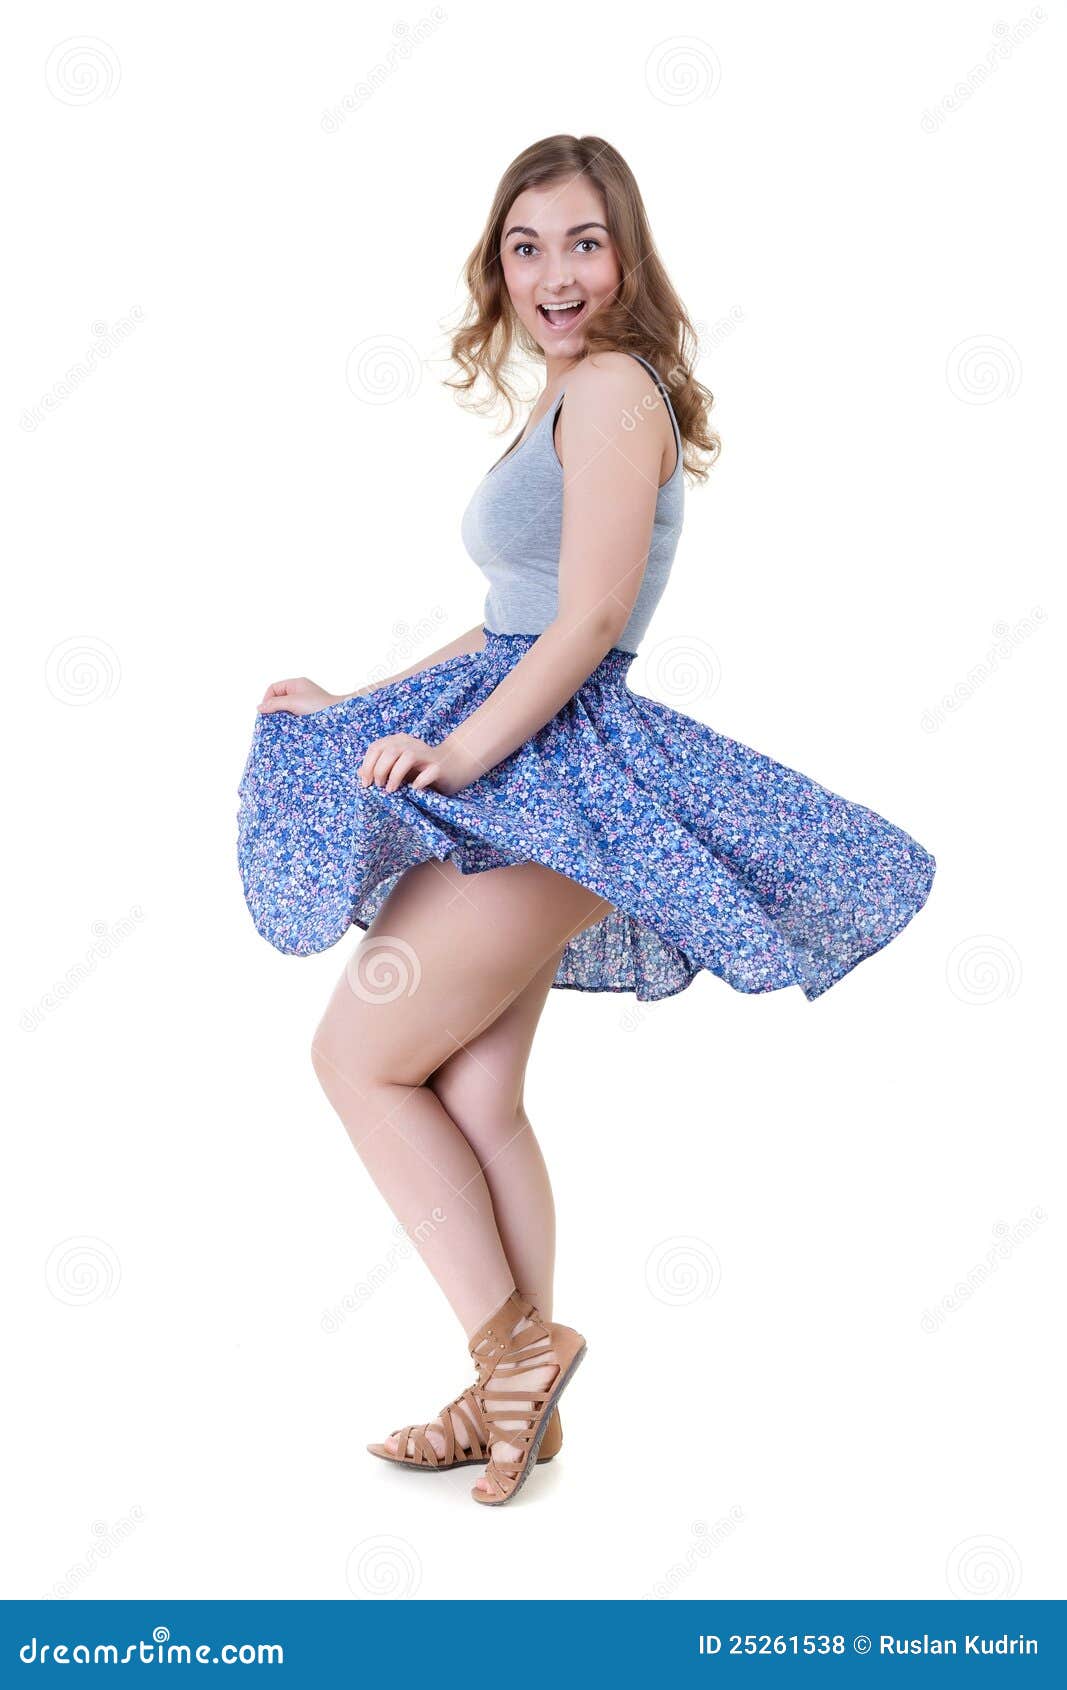 biplav das add girl lifting up her skirt photo